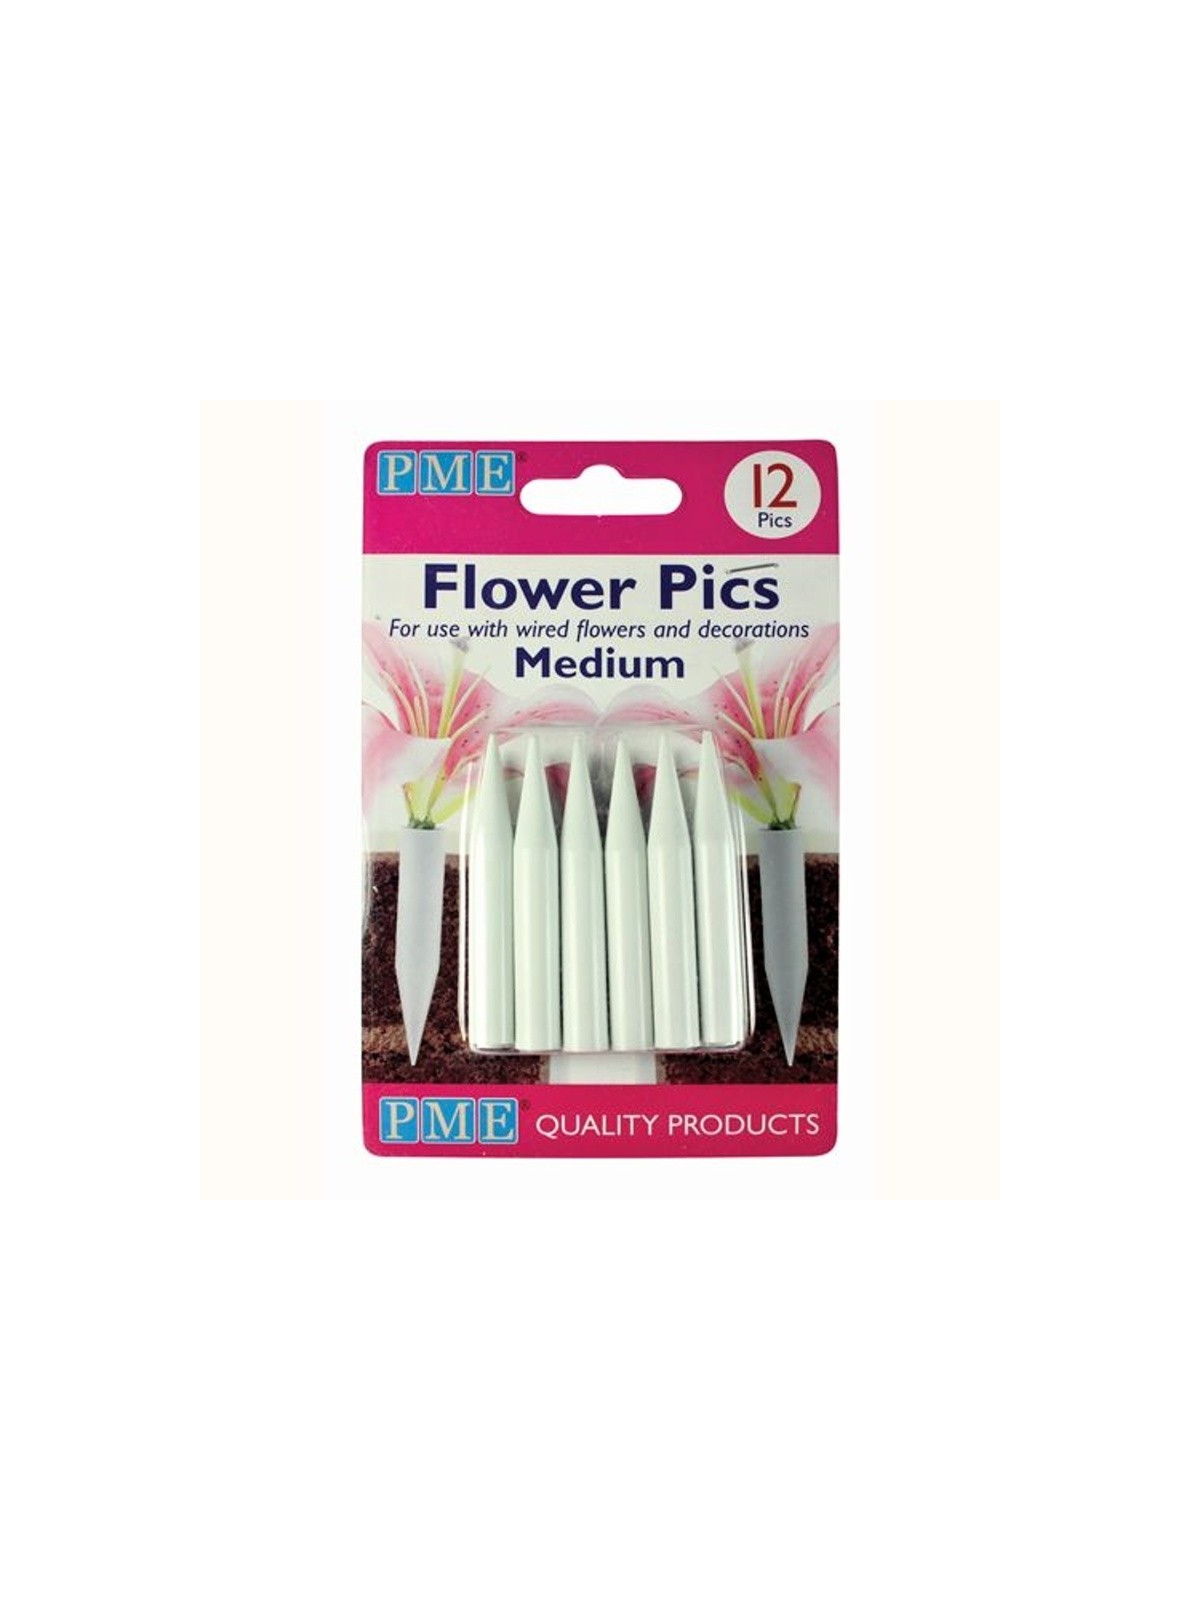 PME Flower Spikes per 12 - medium